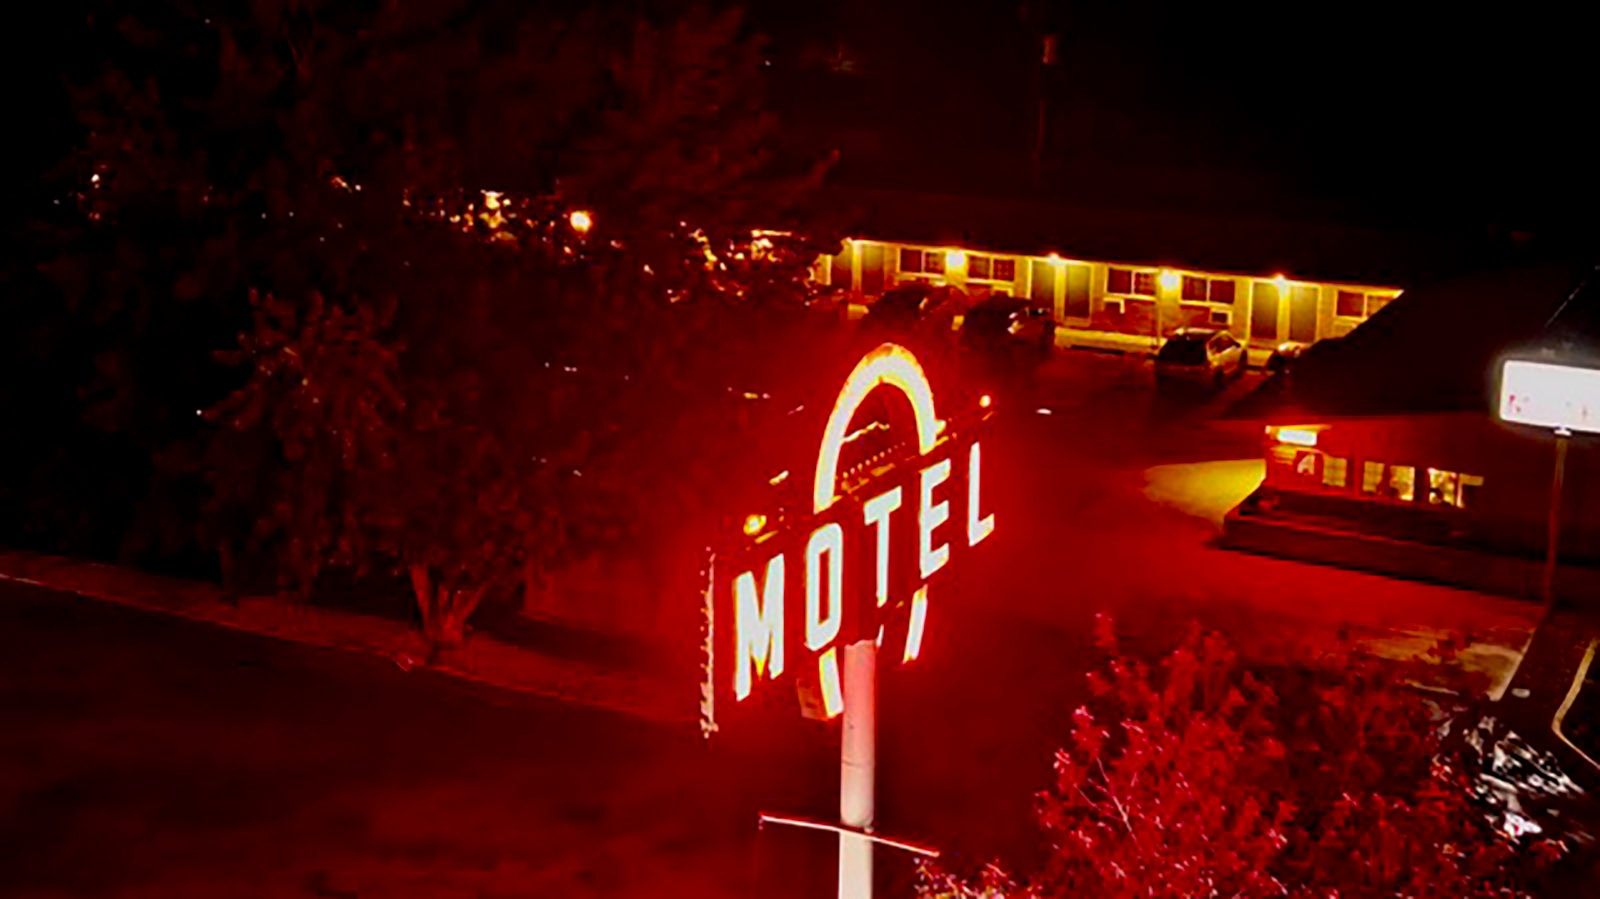 The Horseshoe Bend Motel at night.